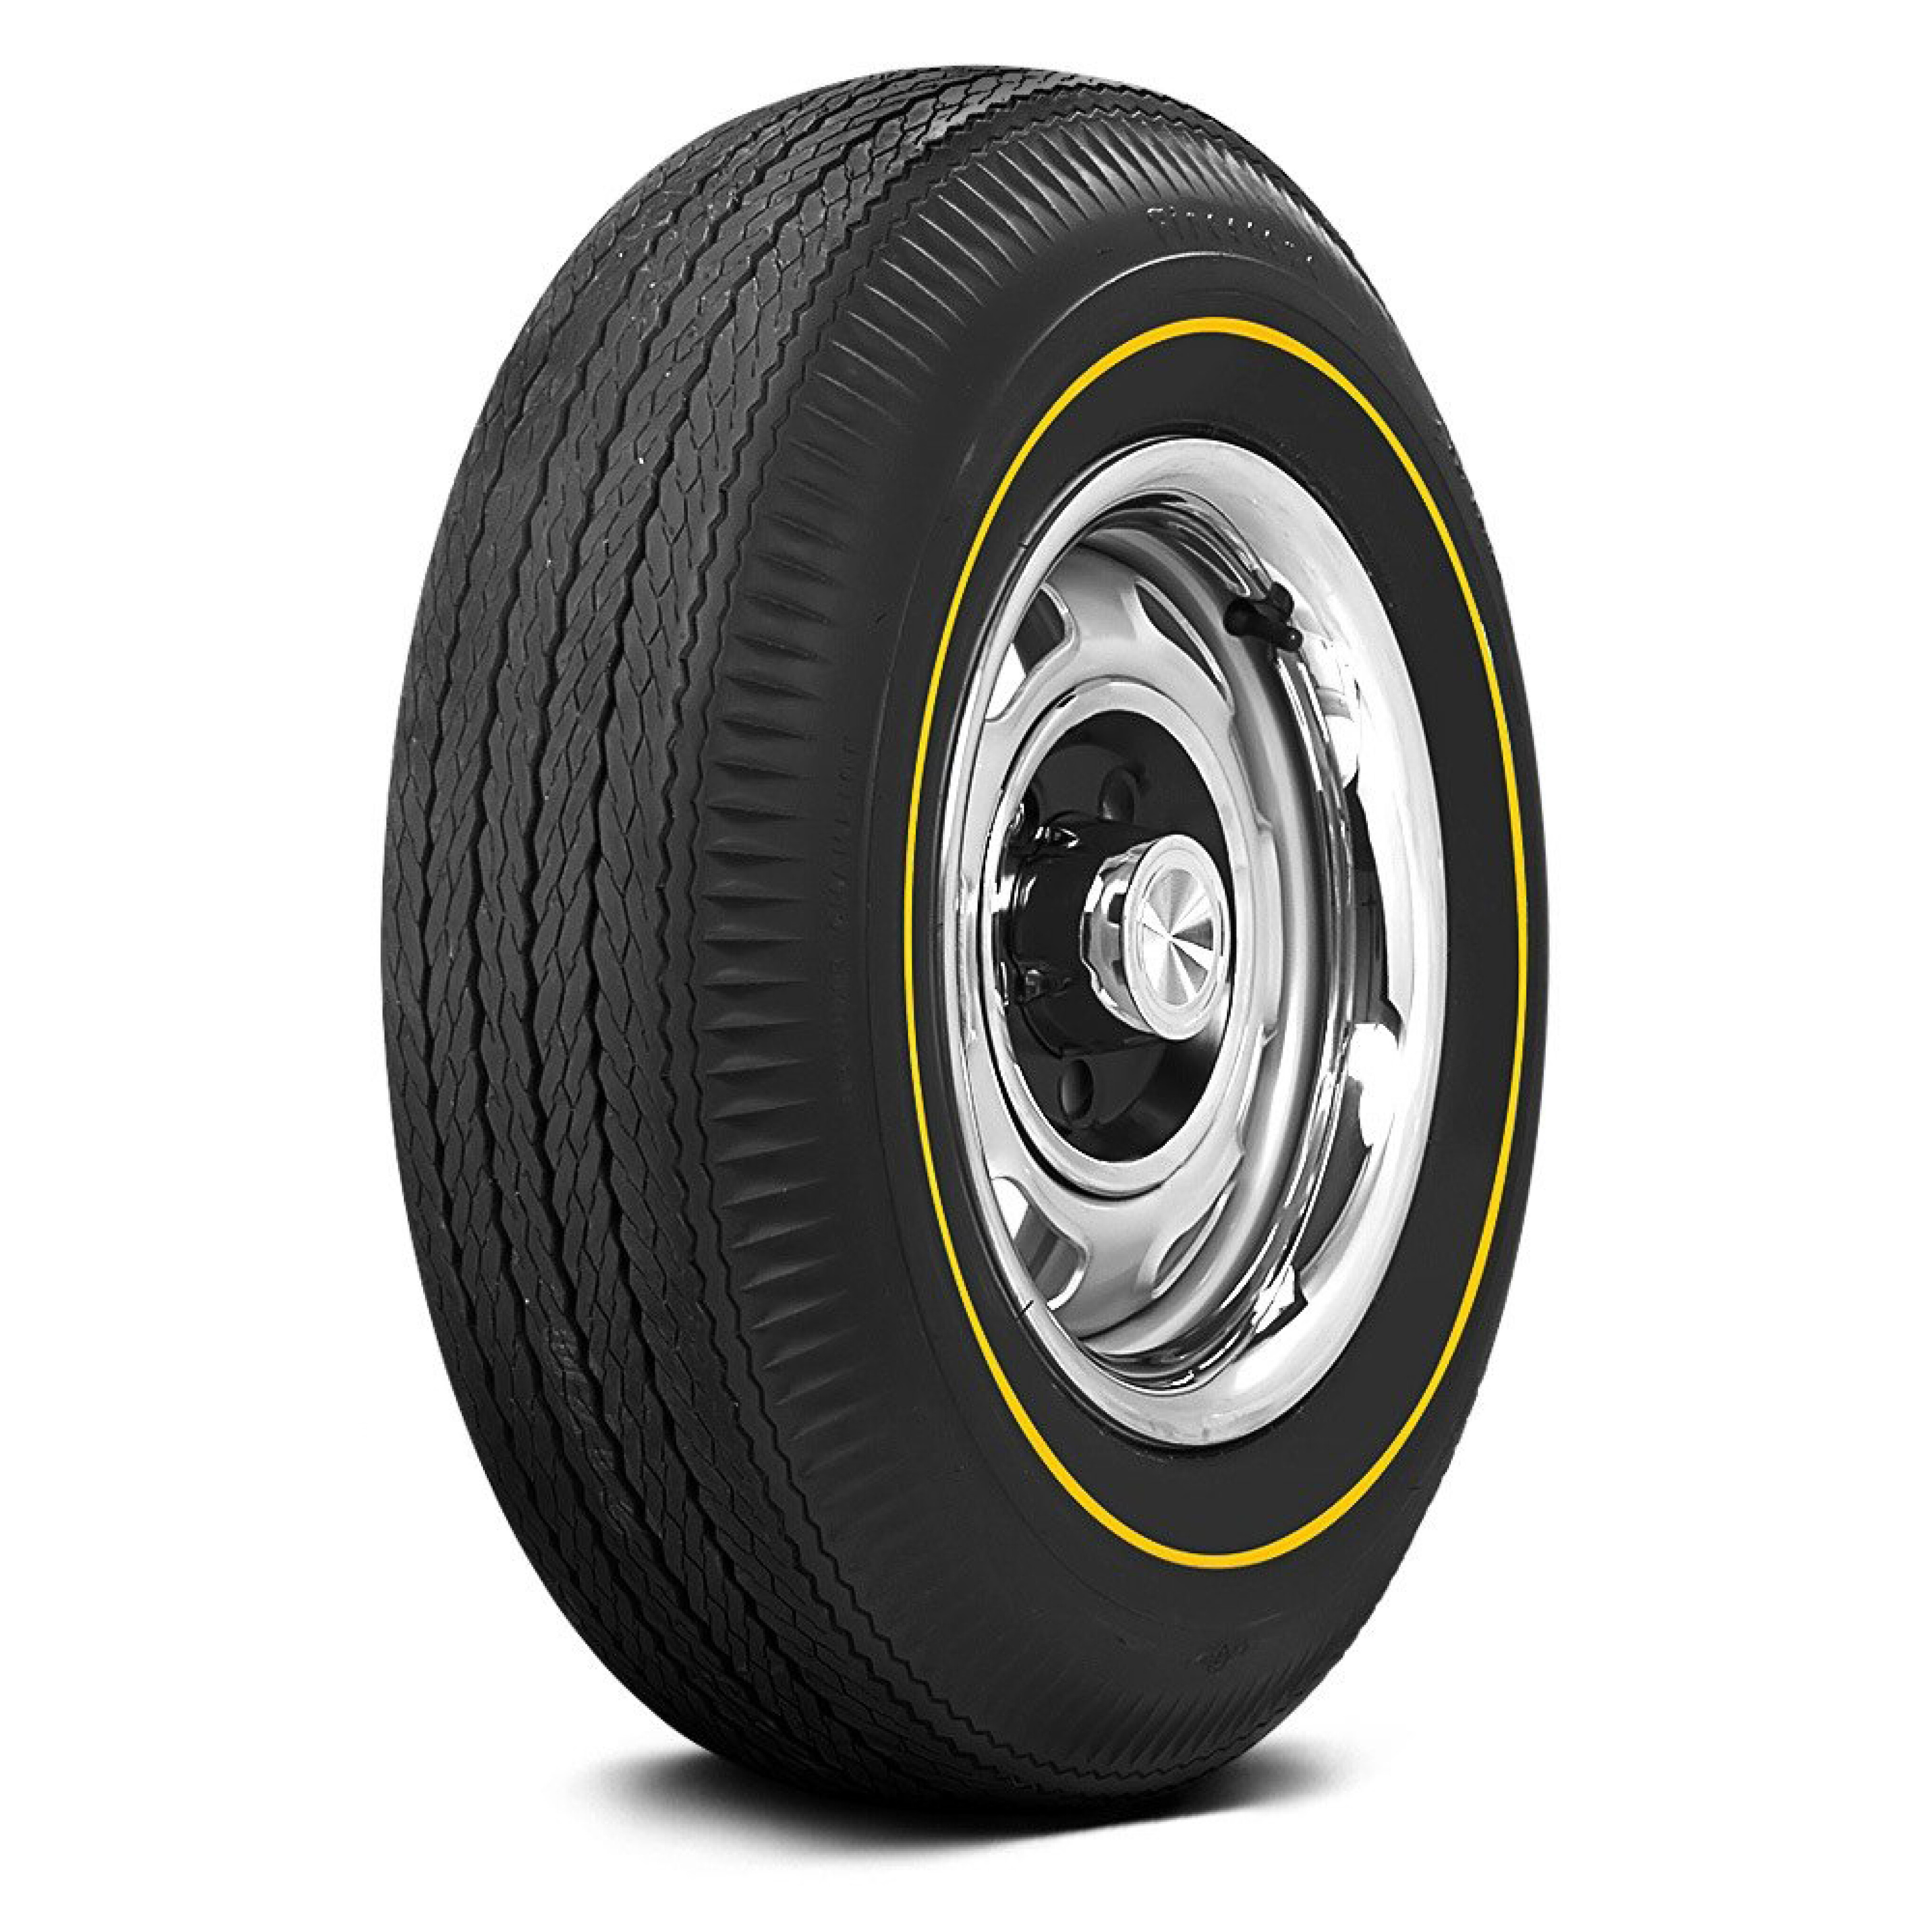 b1d91041/tyre tech cross ply 2 jpg